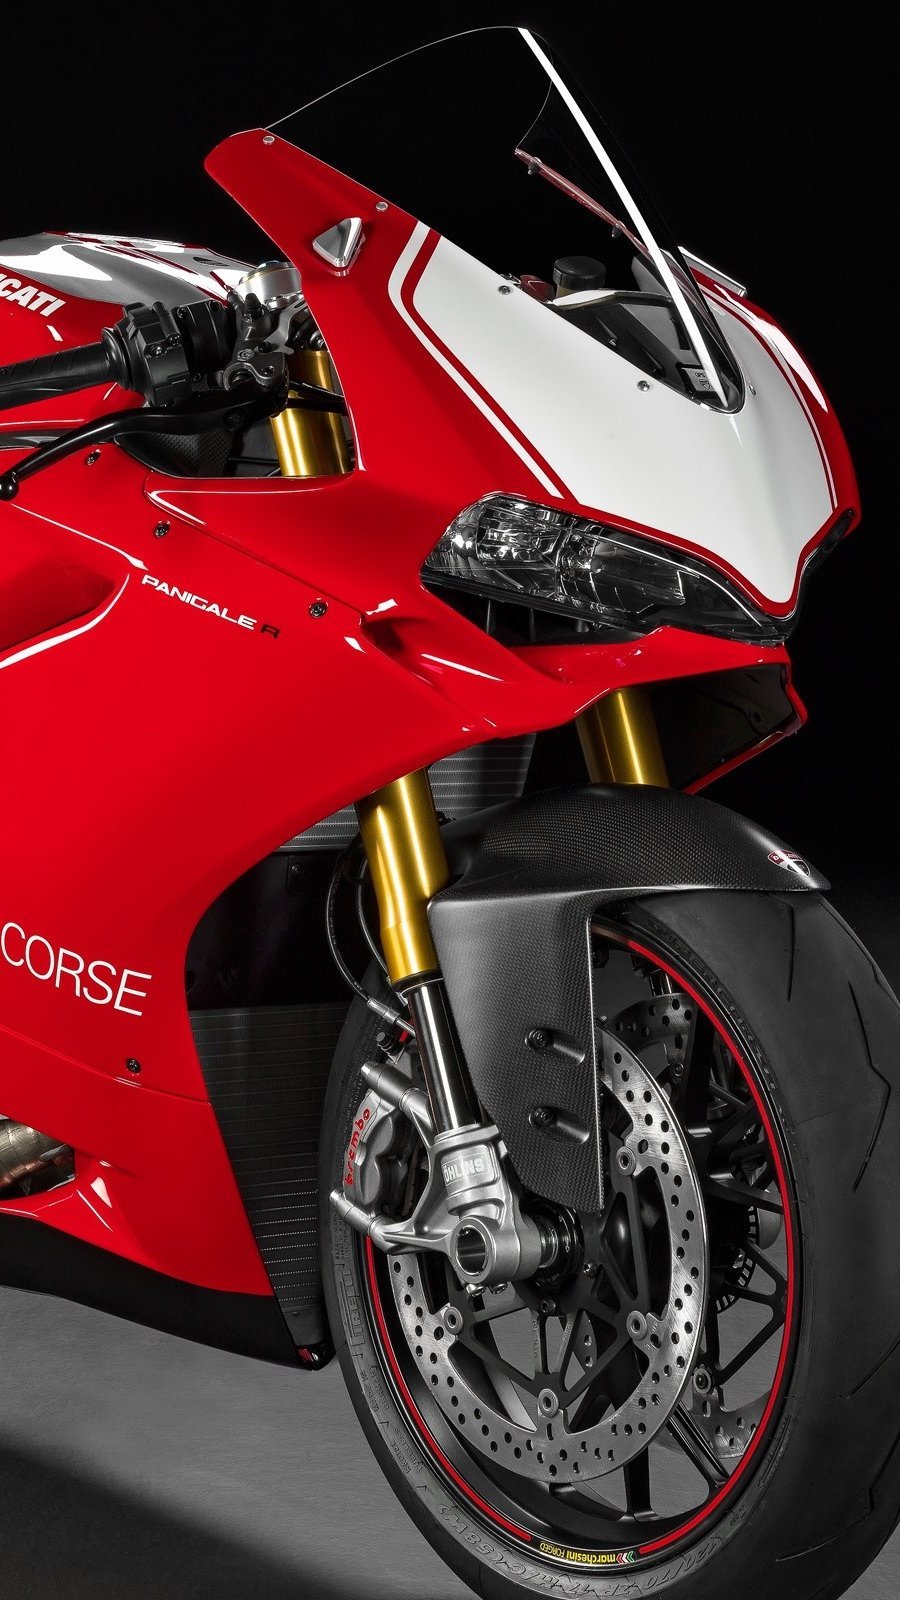 Fondos de pantalla Ducati Panigale R superbike roja Vertical